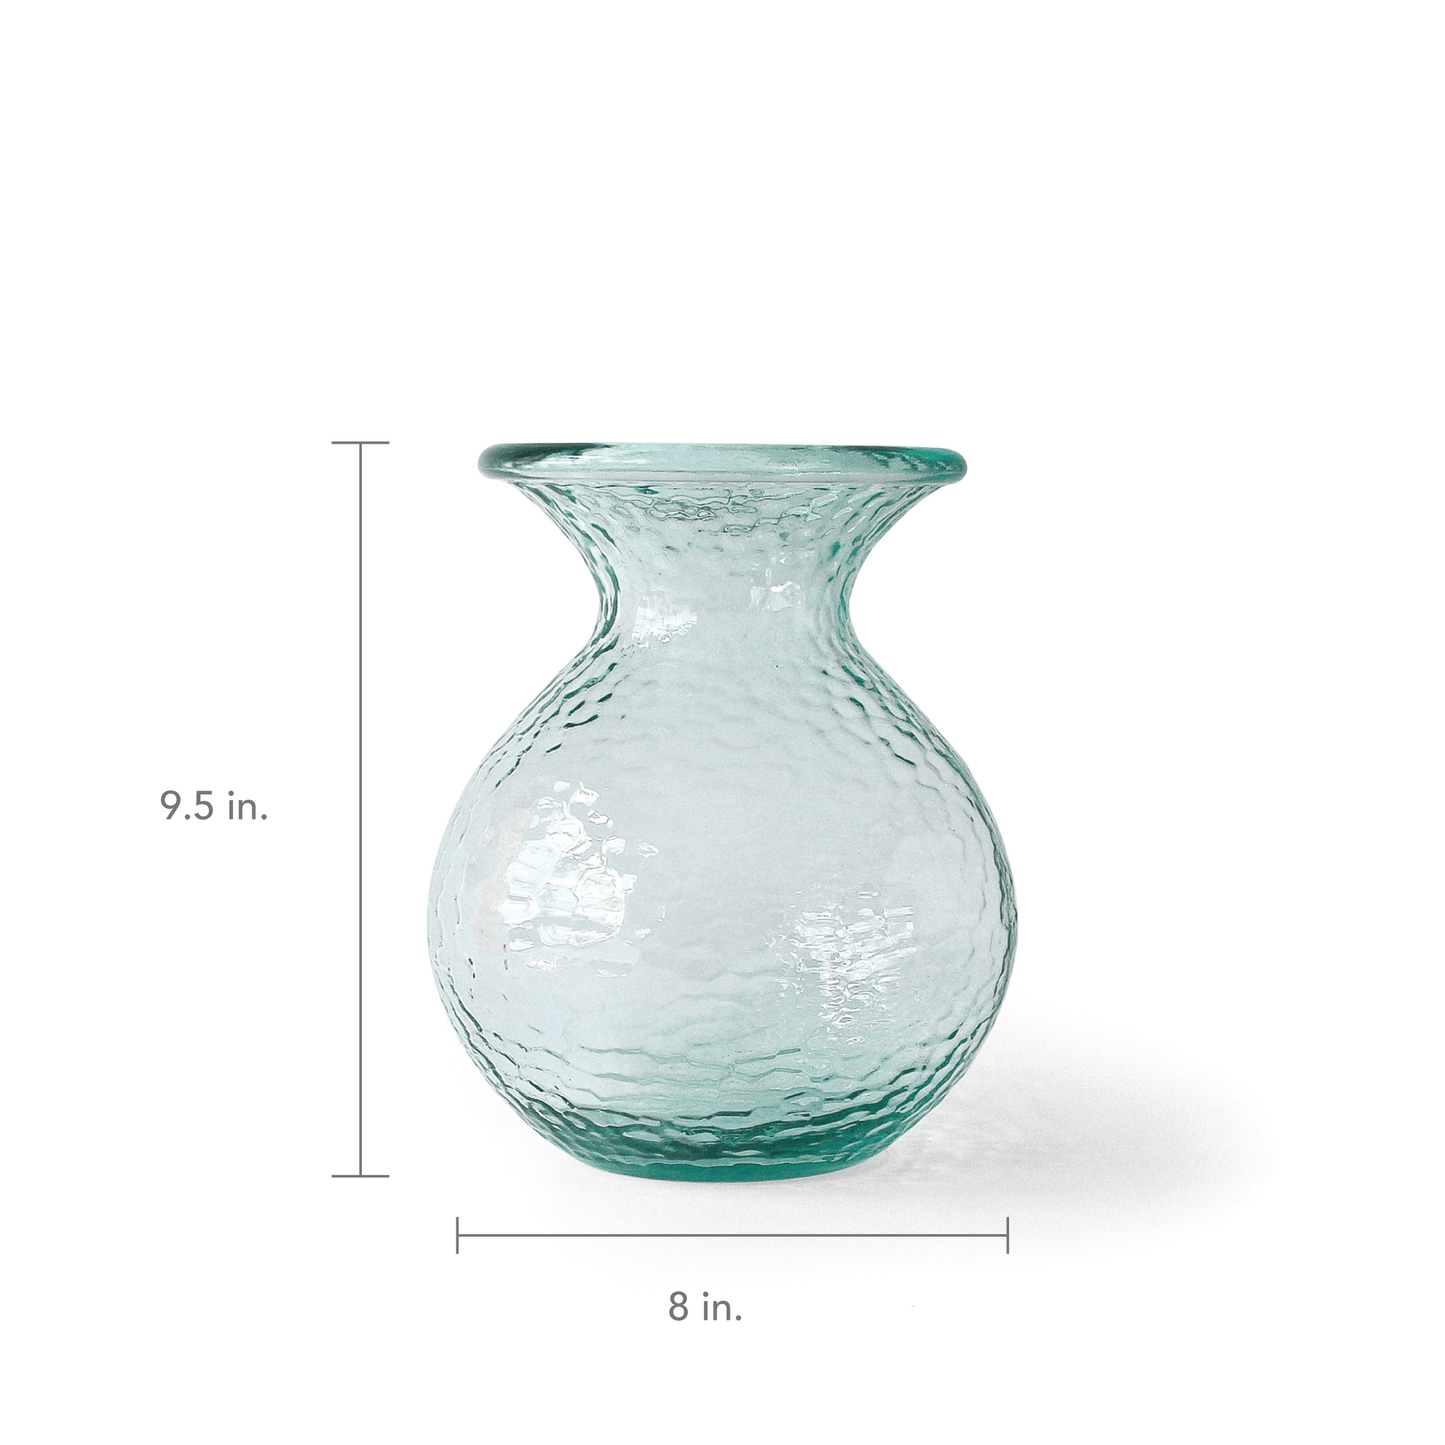 100% Recycled Spanish Hammered Vase